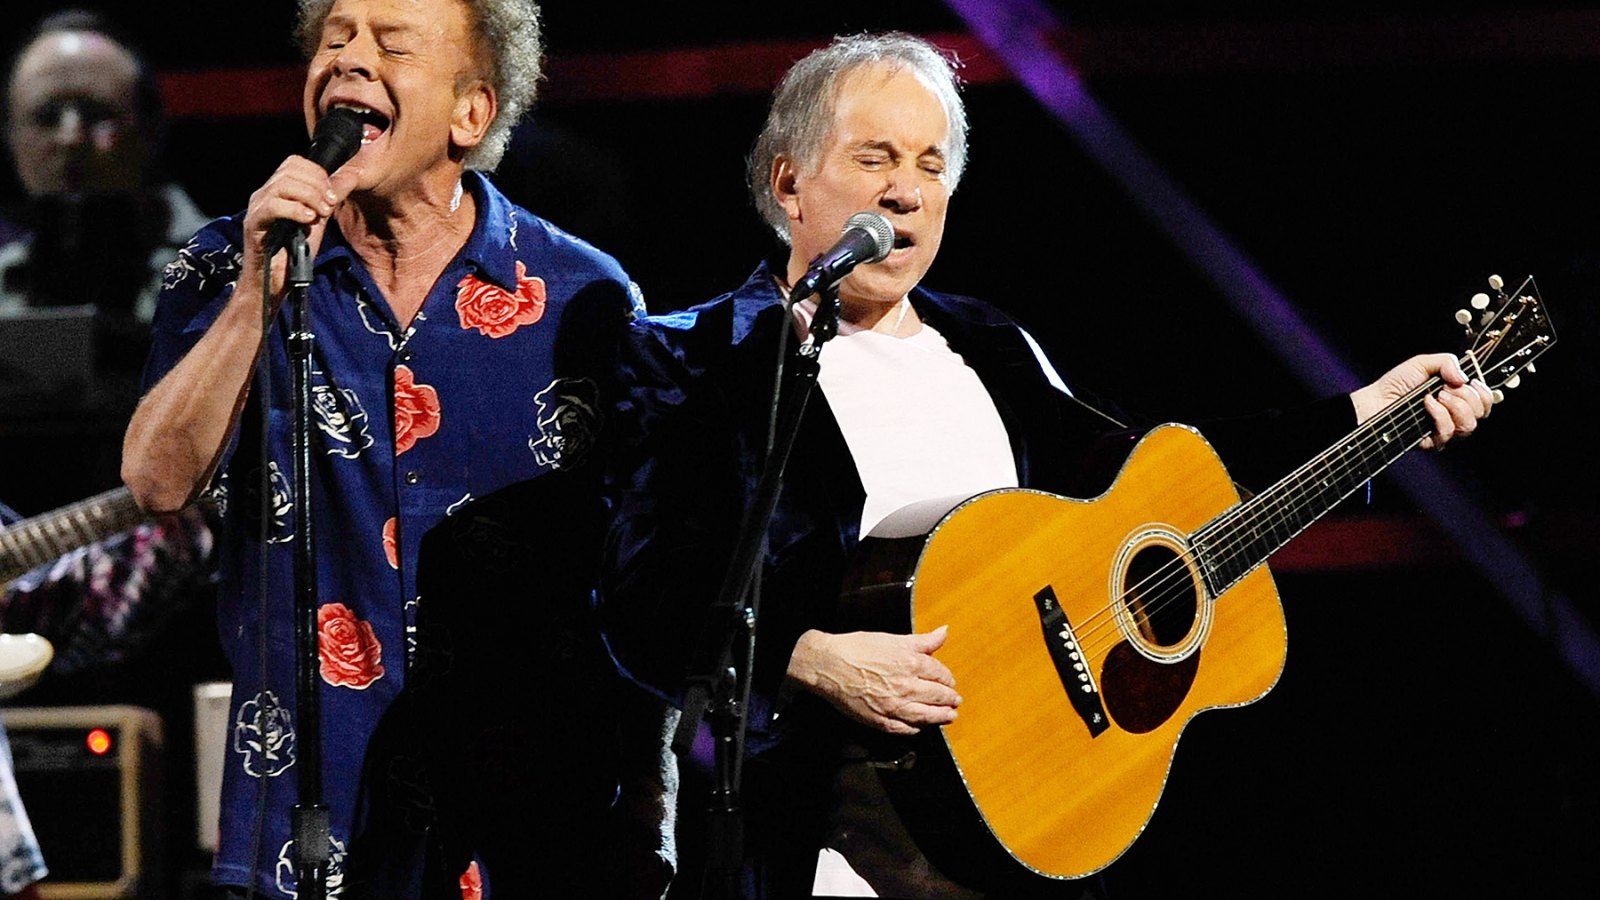 Simon and Garfunkel perform in 2009